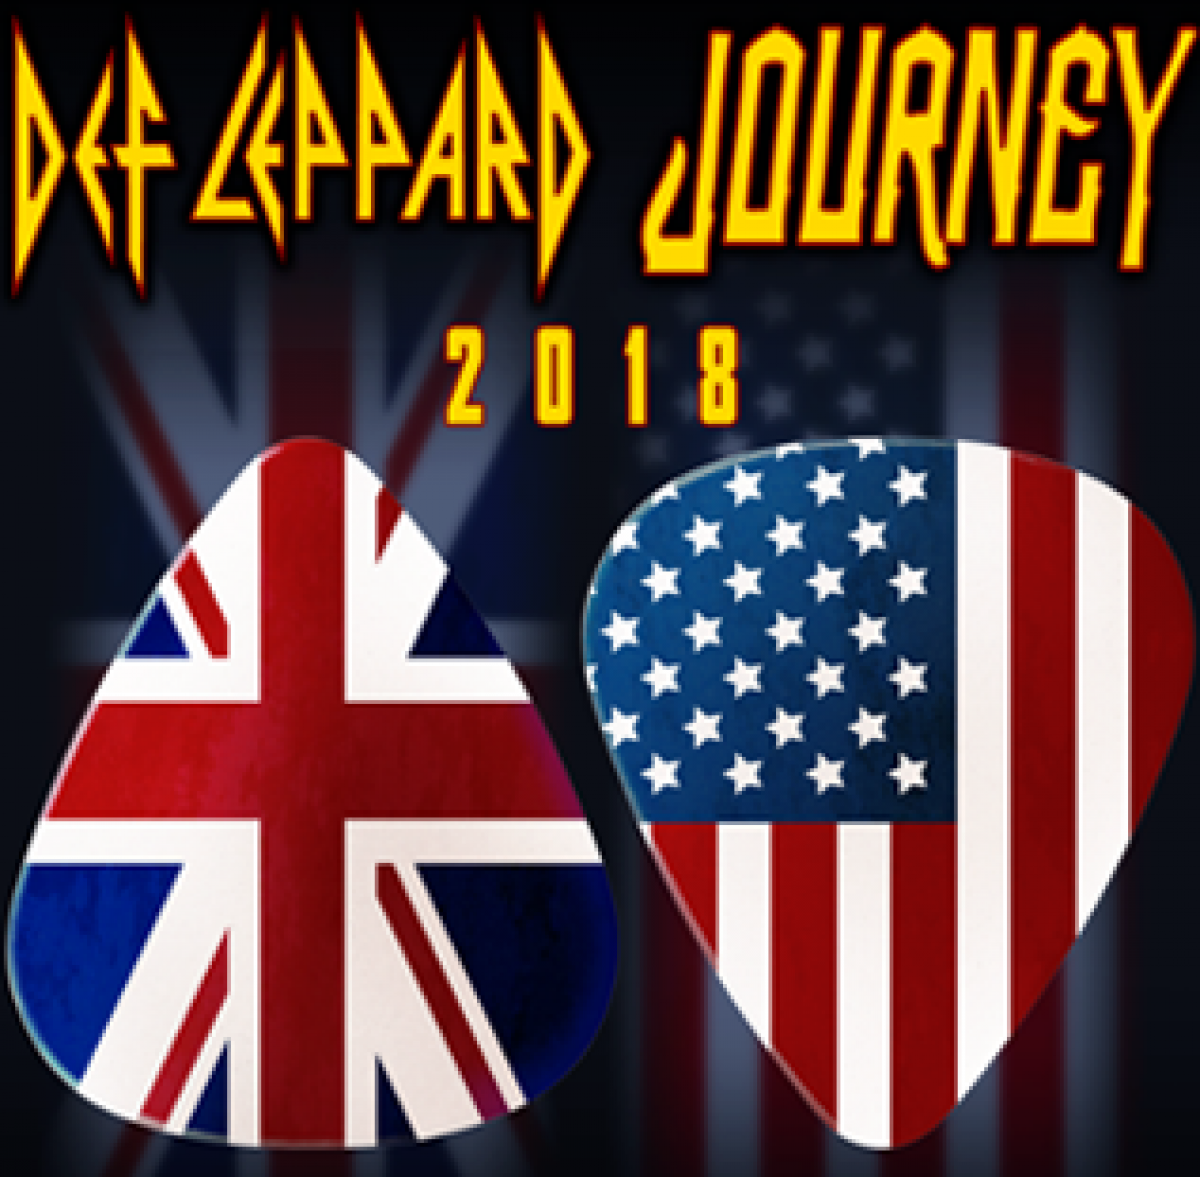 Def Leppard & Journey 